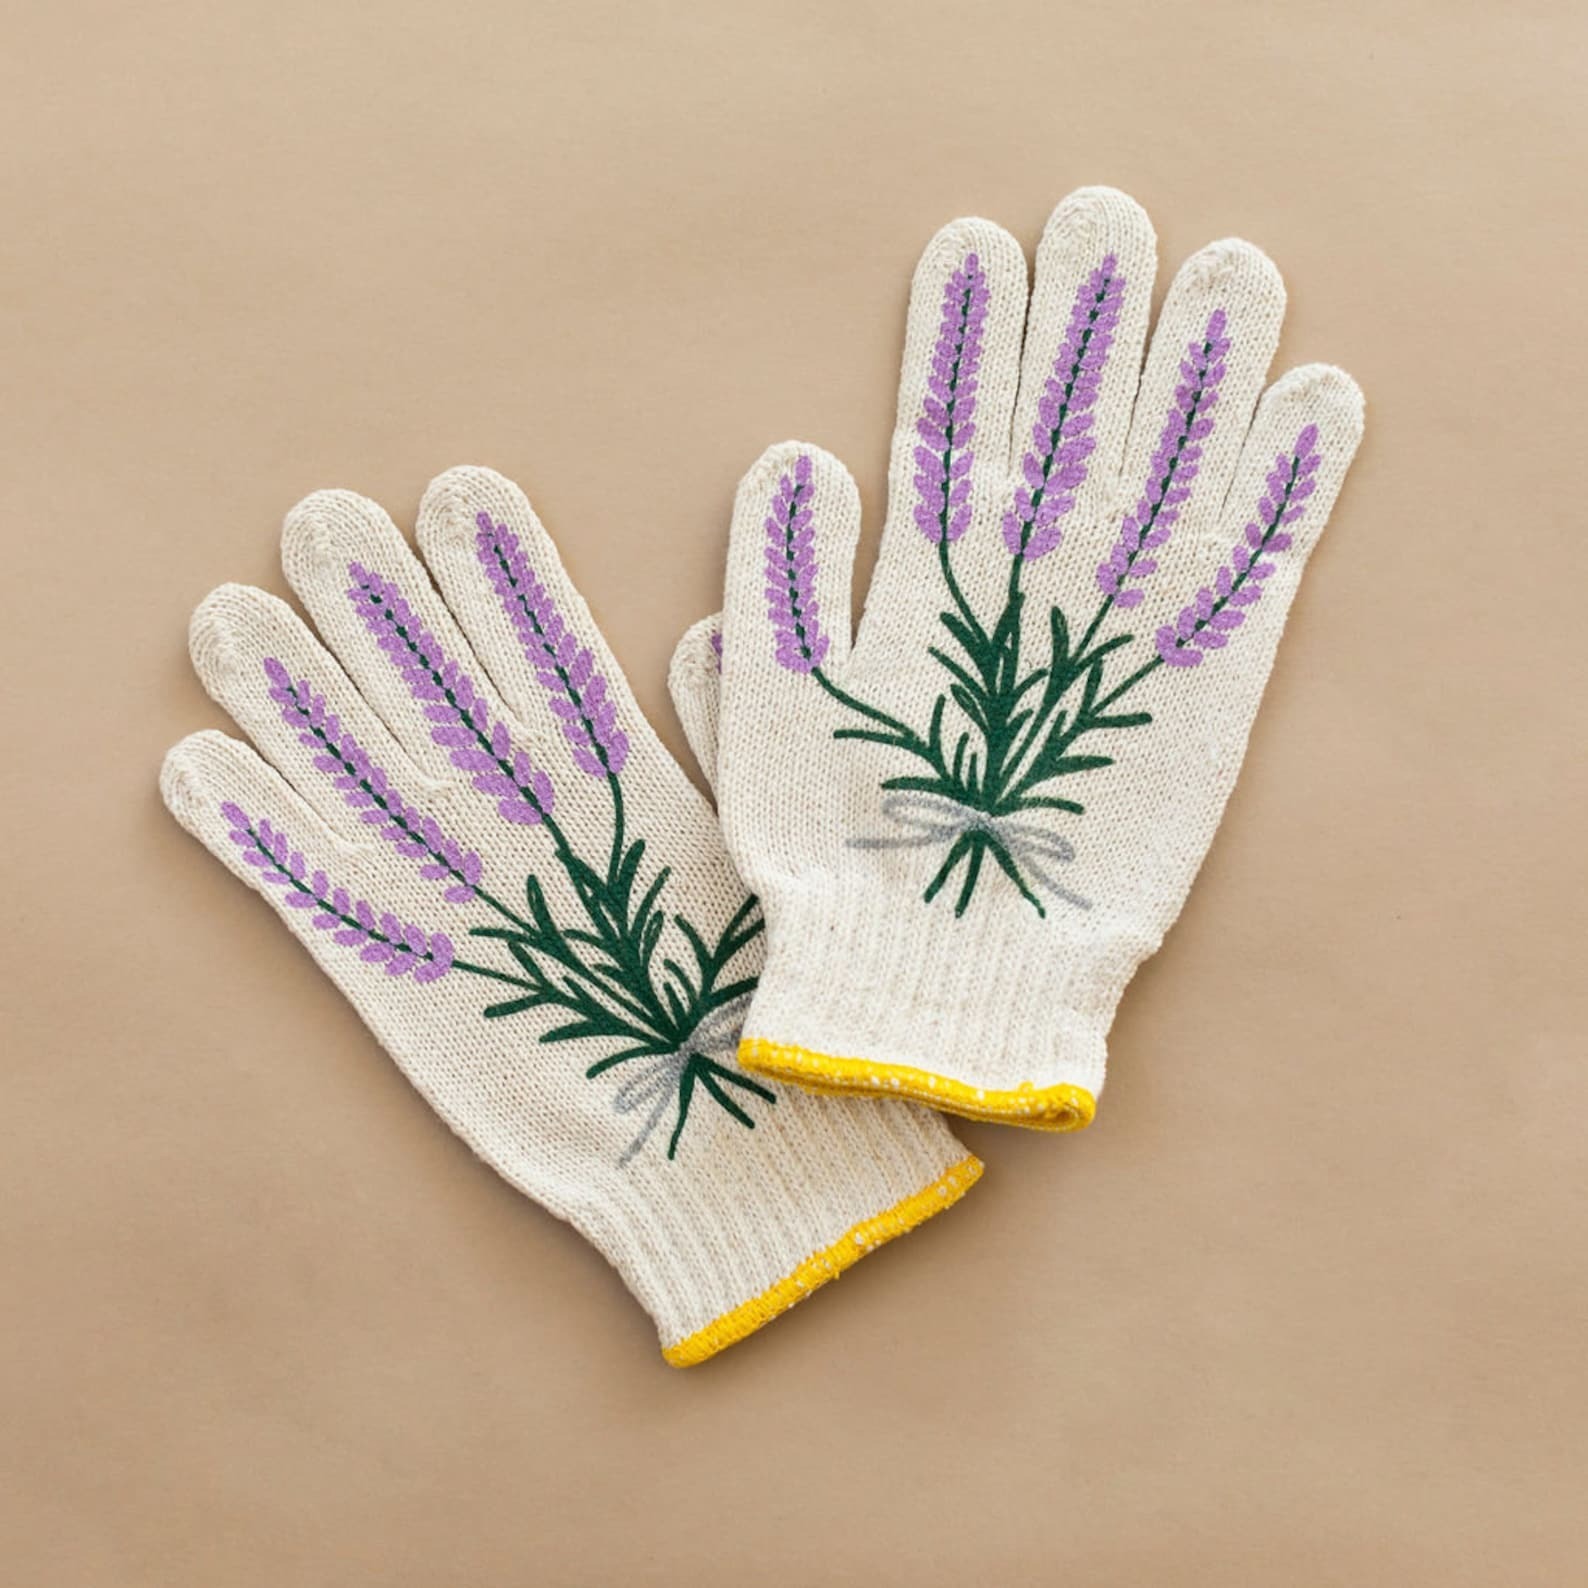 🔥Hot Sale 50% OFF——New Lavender Gardening Gloves